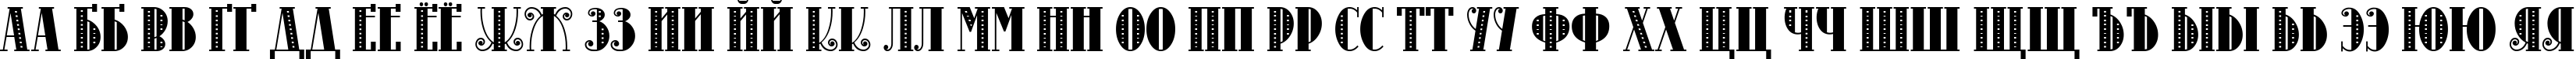 Пример написания русского алфавита шрифтом Disco 60-s